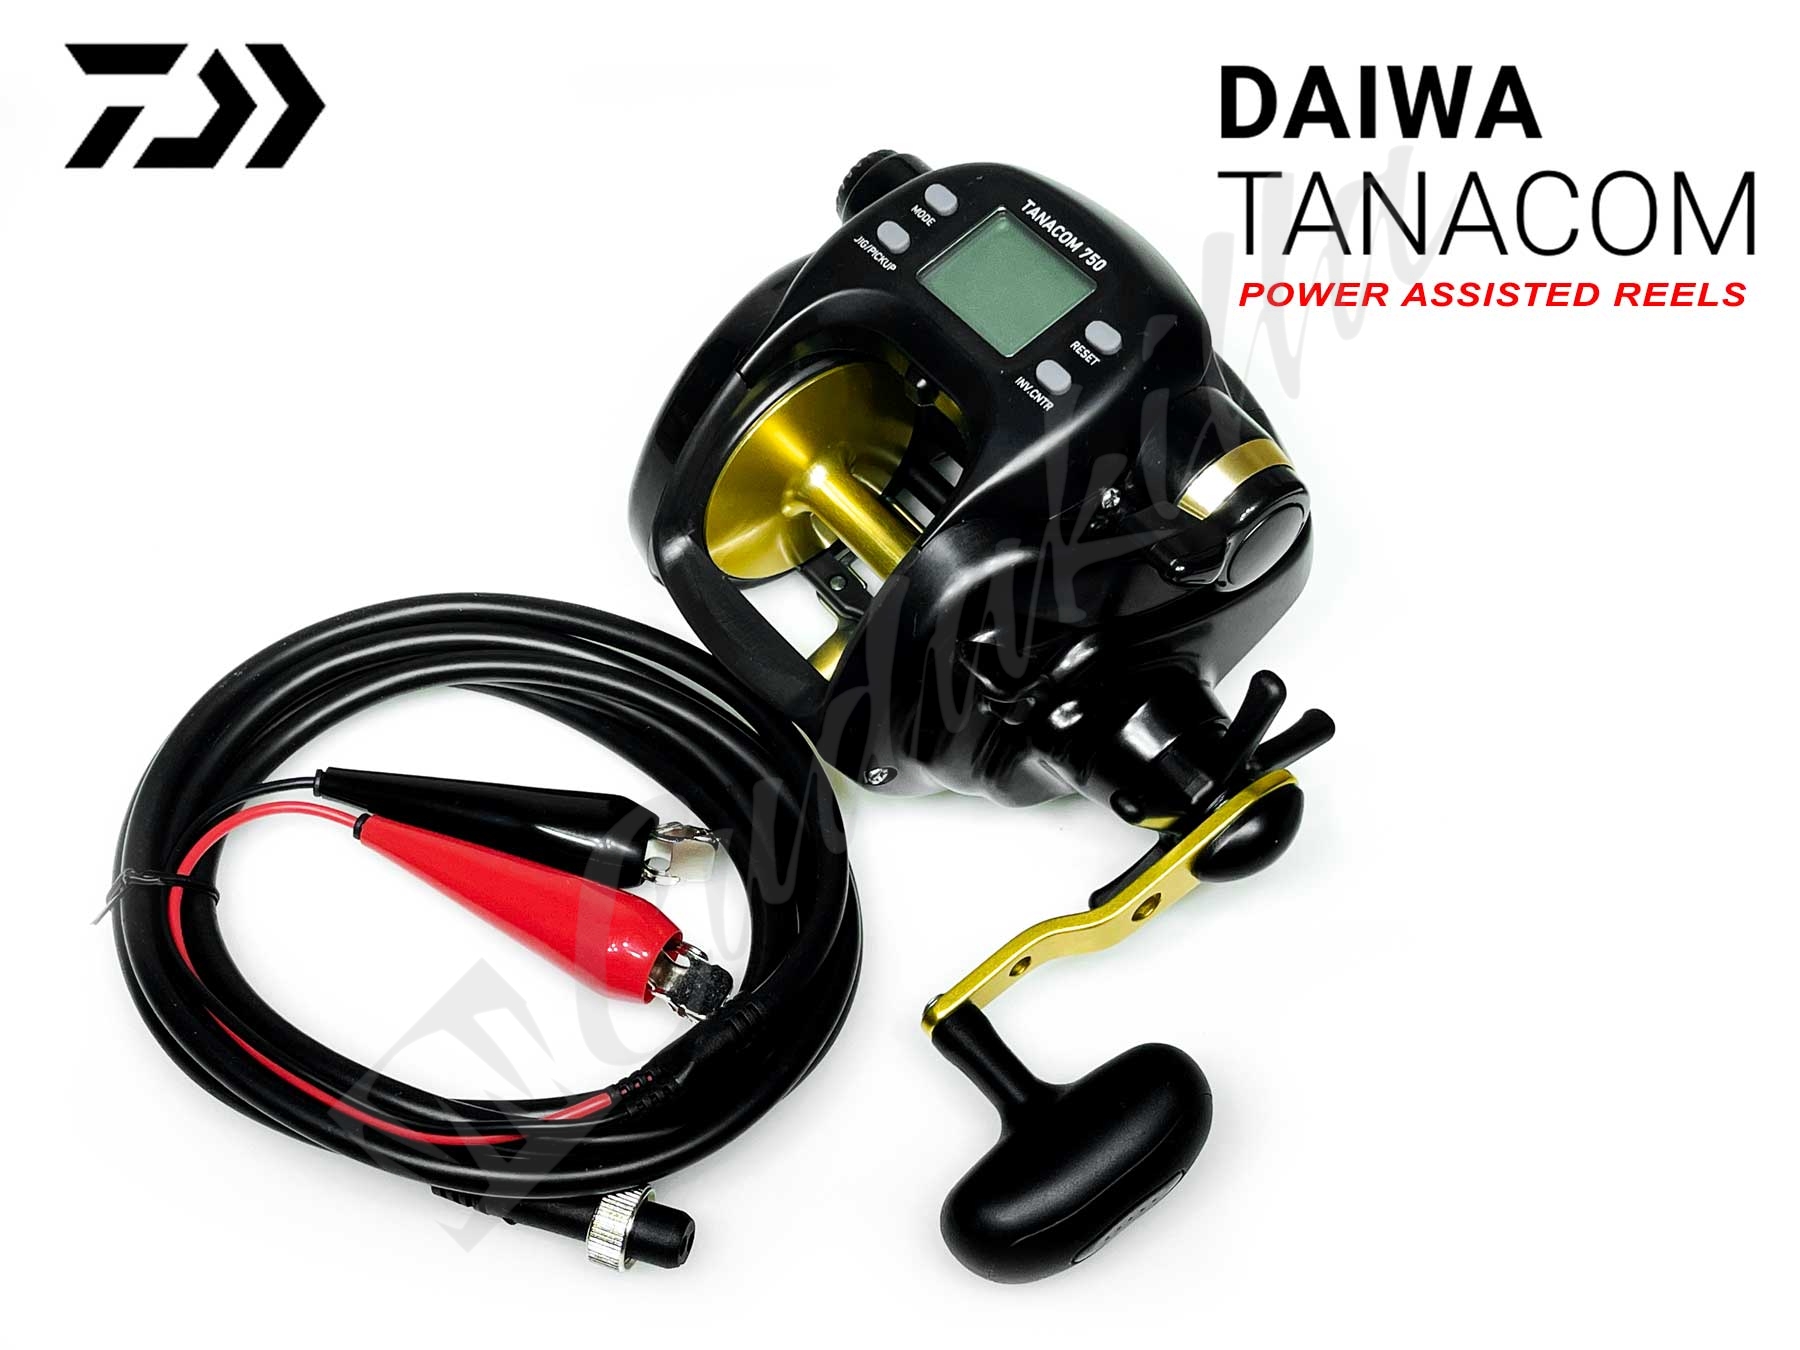 NEW ARRIVAL. 2 Daiwa Tanacom 1000 electric reels with new braid